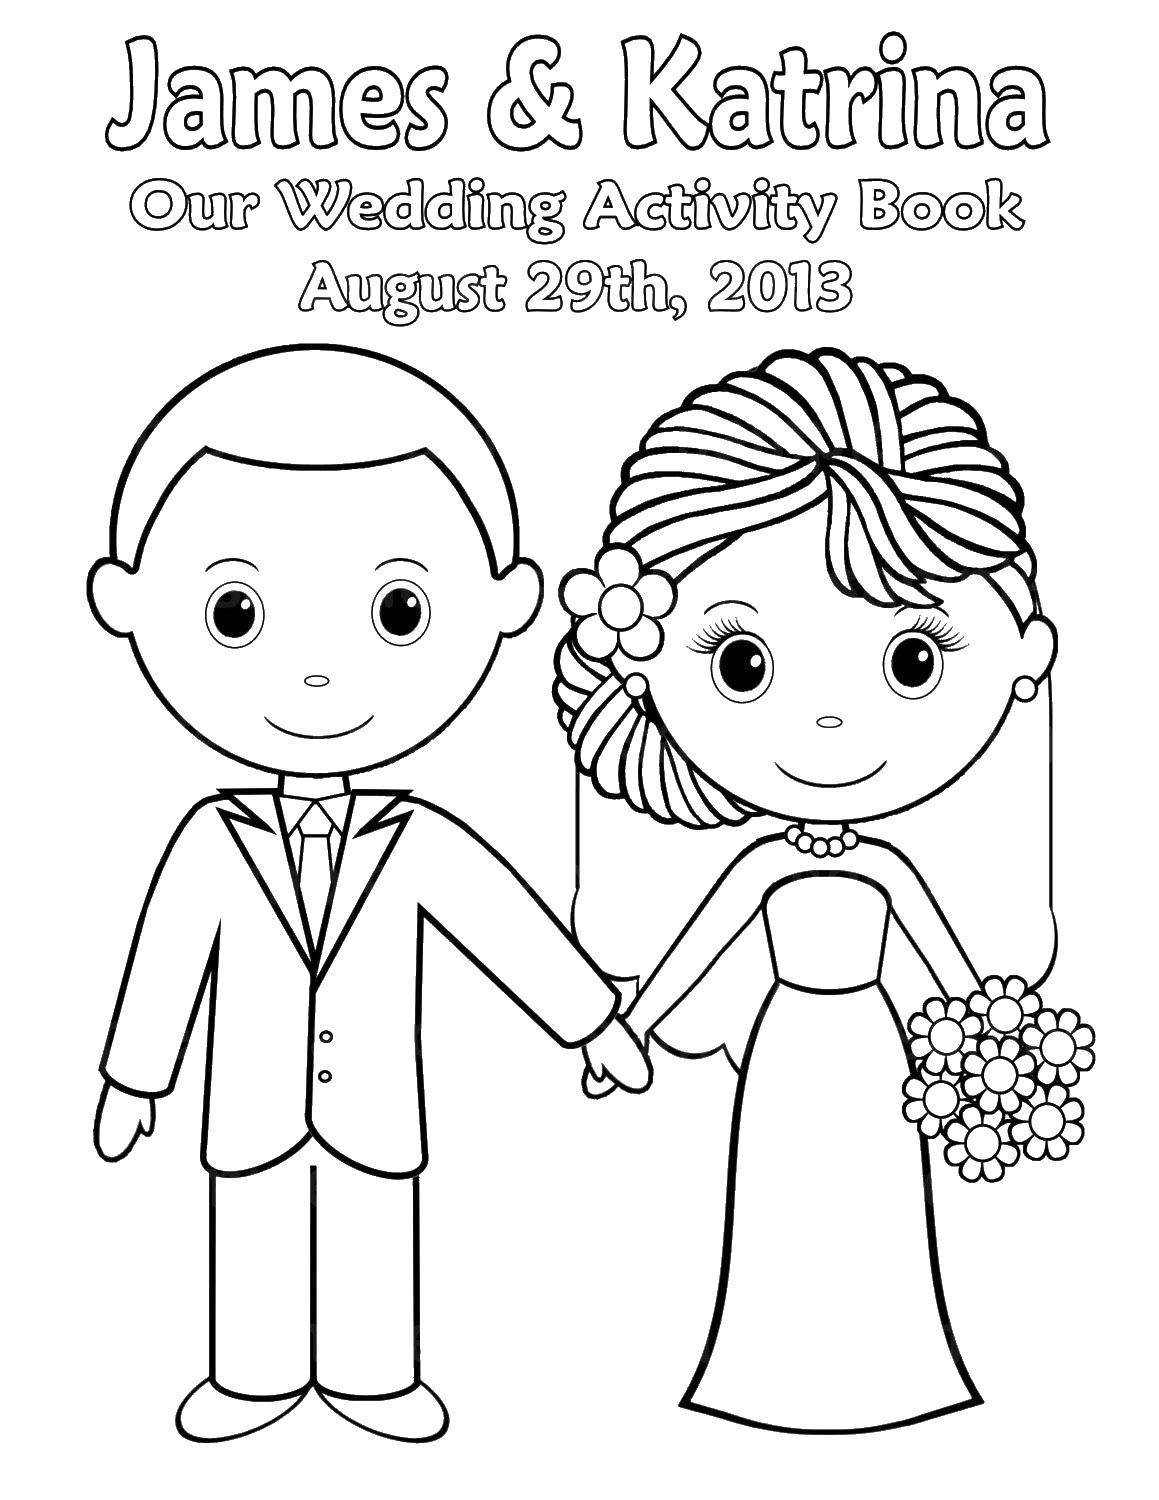 Coloring James and Katrina. Category Wedding. Tags:  Wedding, dress, bride, groom.